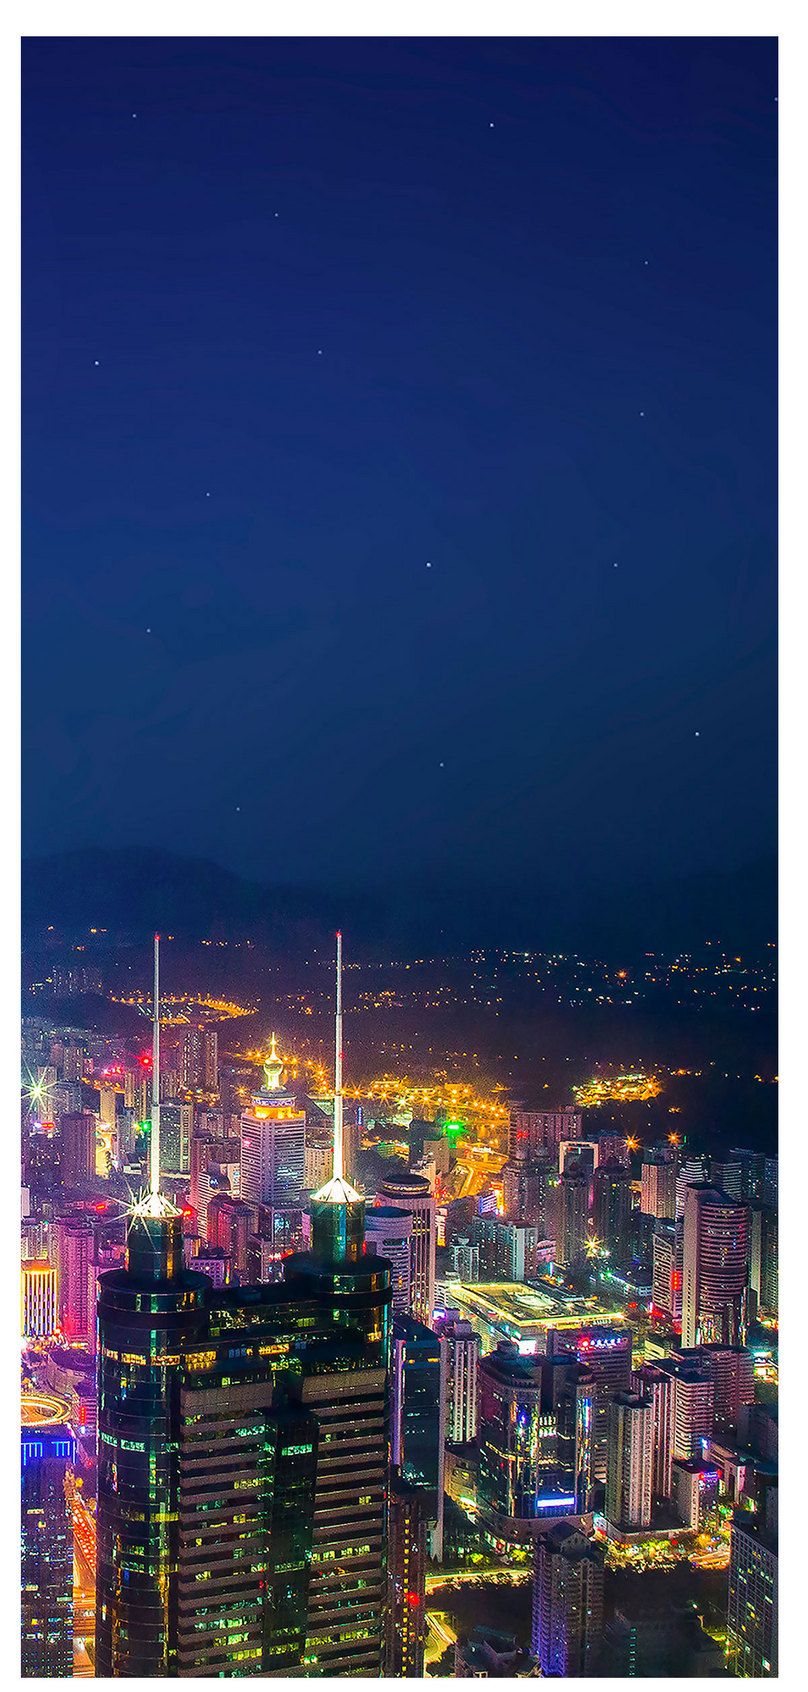 City Nightscape Mobile Wallpaper Background Image Free Download 400584667 Lovepik.com